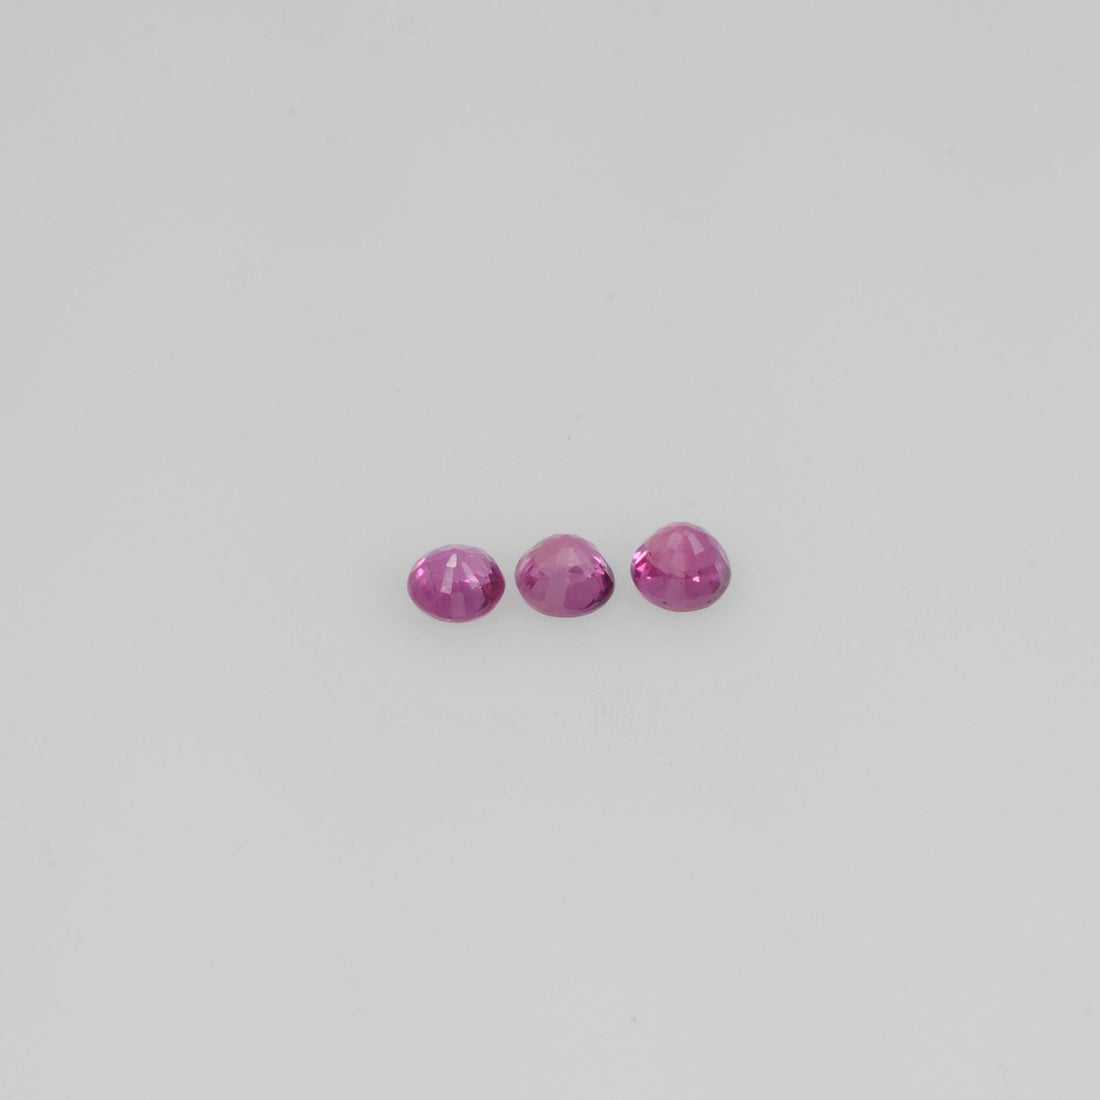 1.7-3.8 mm Natural Ruby Loose Gemstone Round Cut